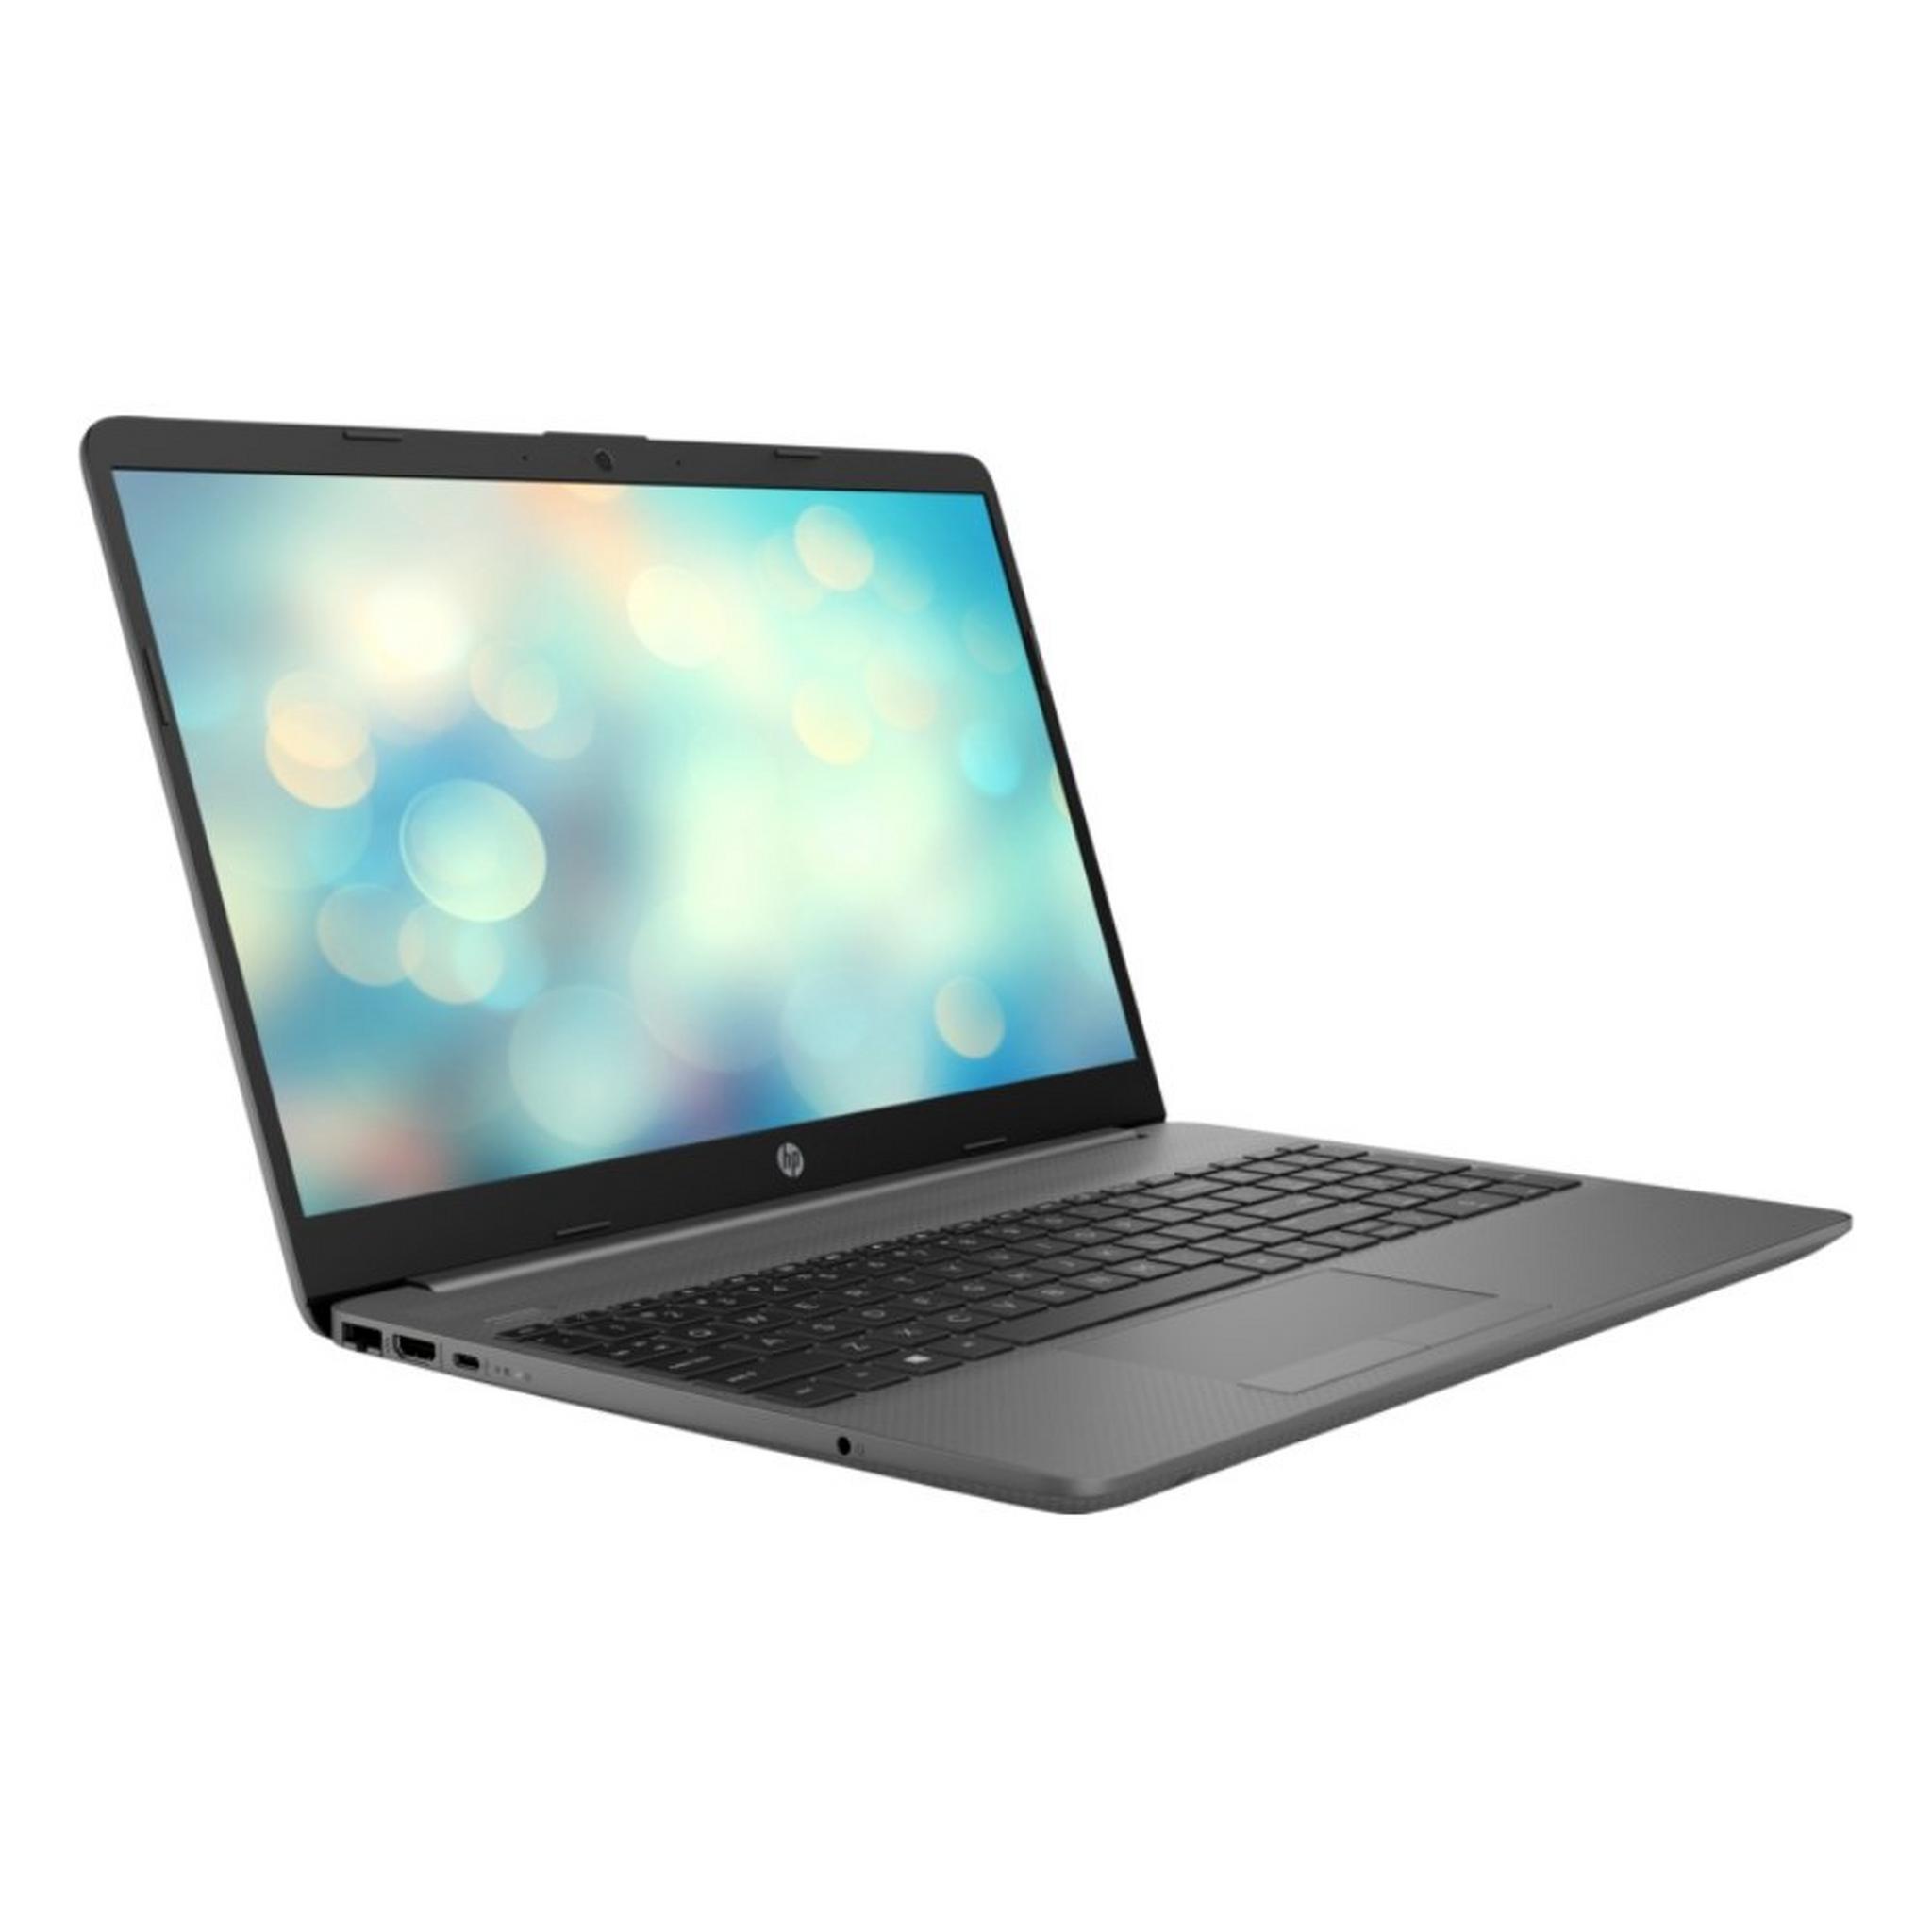 HP 15 Intel Core i7, 8GB RAM, 1TB HDD + 256GB SSD, 15.6-inch Laptop - Grey